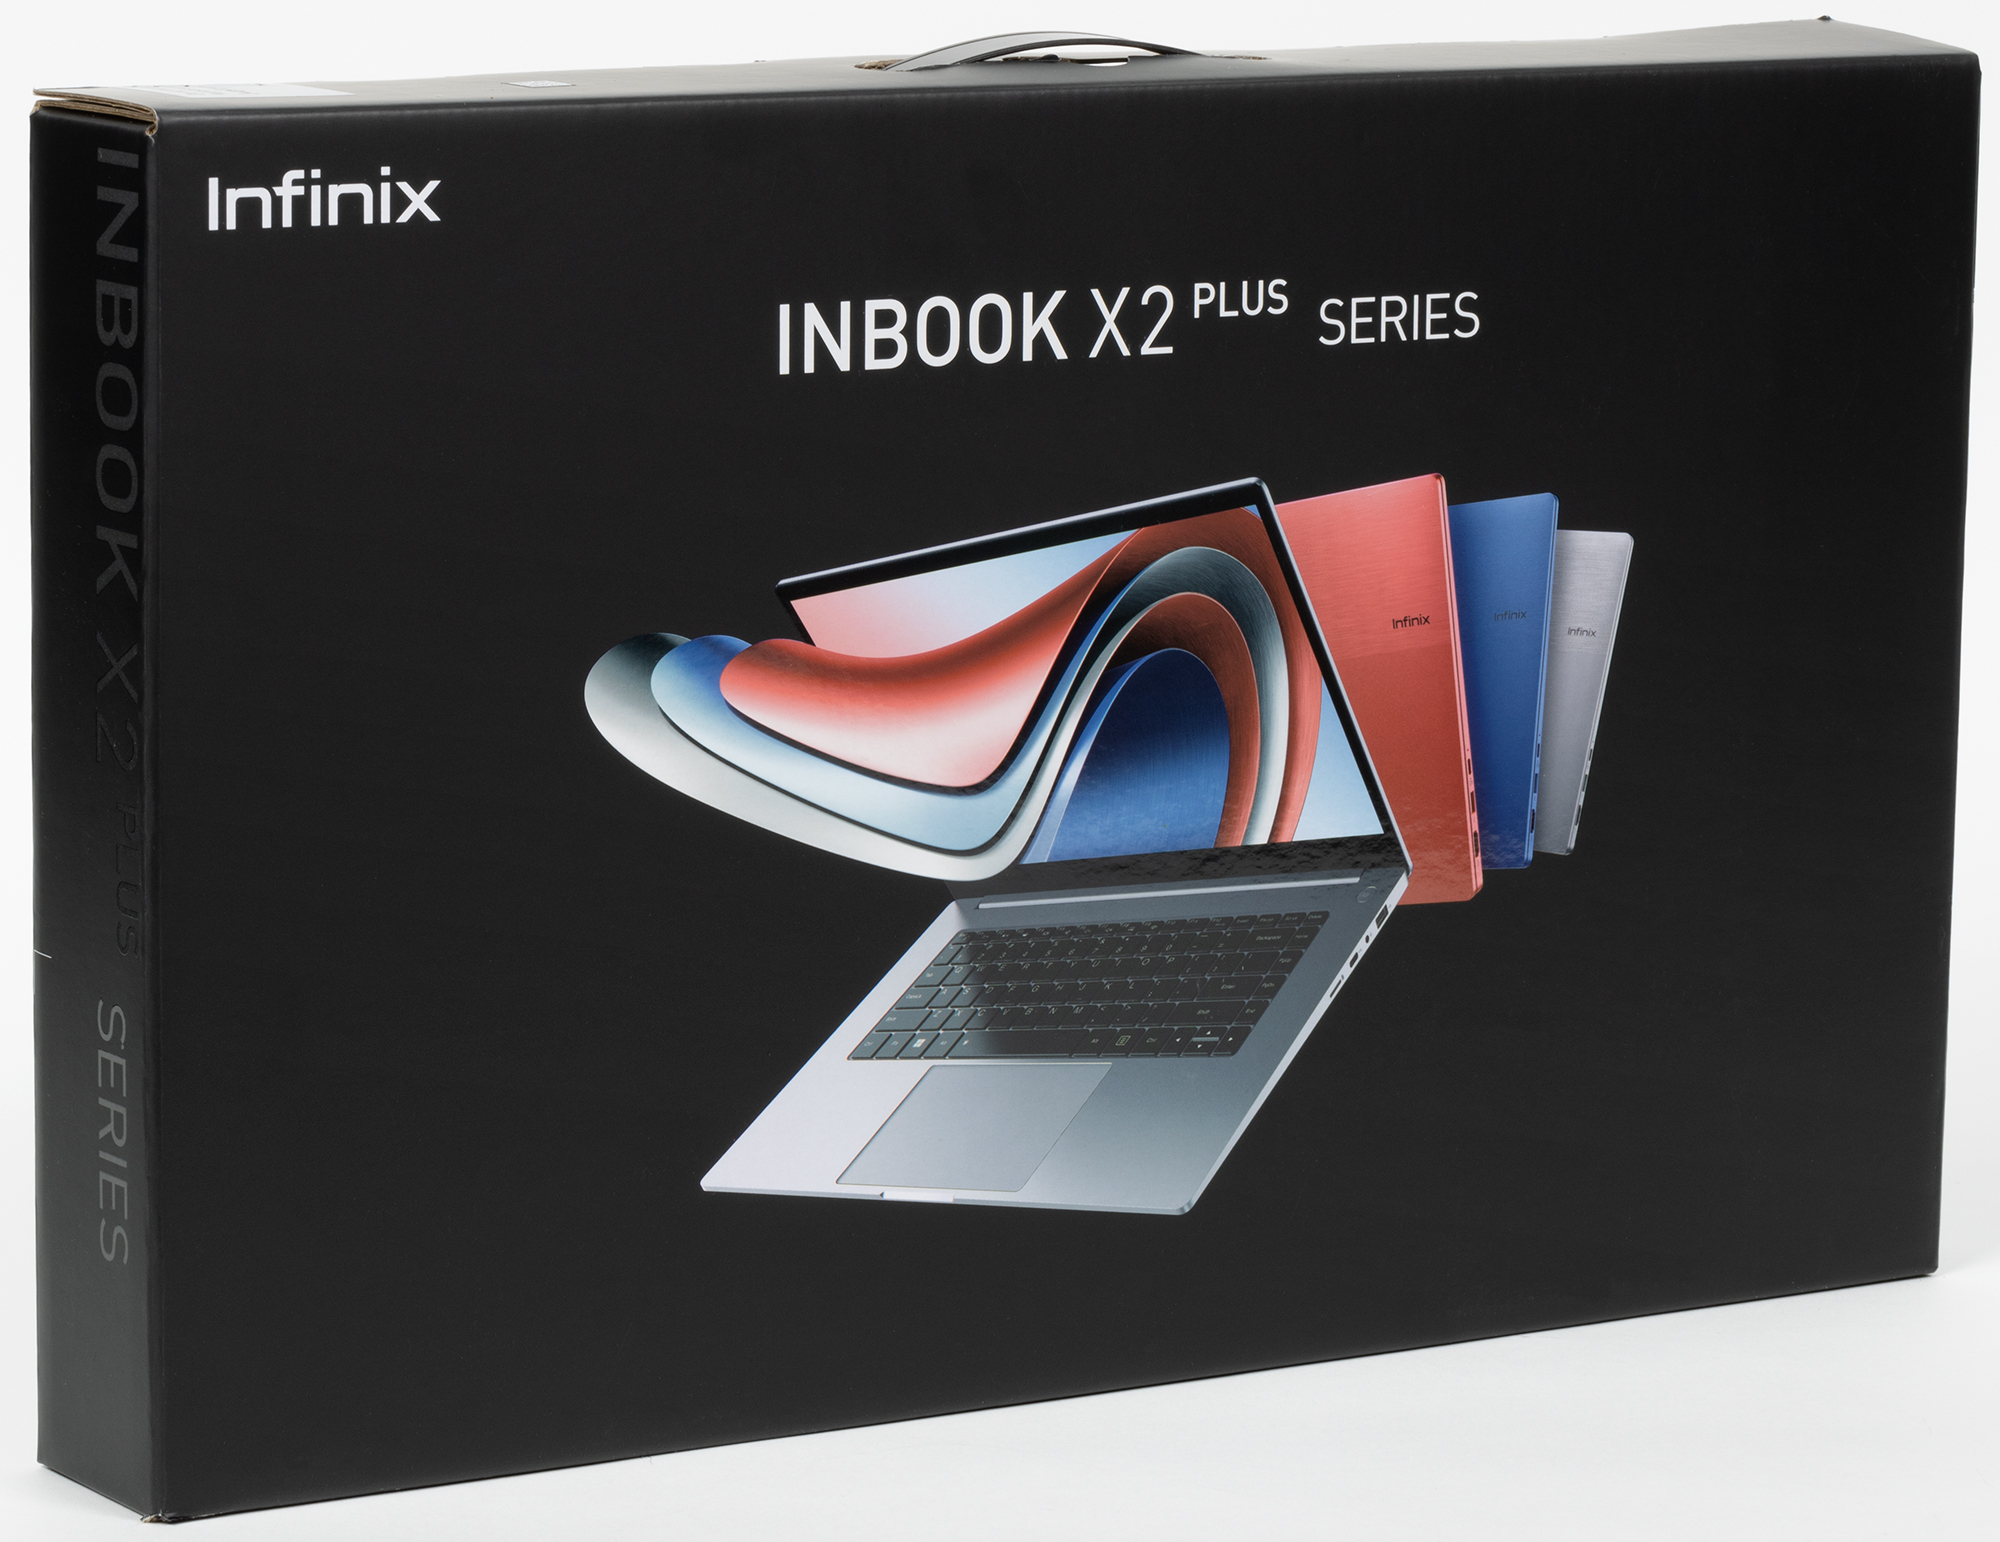 Inbook x2 Plus. Infinix inbook x2. Nfinix inbook x2 Plus xl25. Ноутбук Infinix 2 Plus. Купить ноутбук infinix inbook